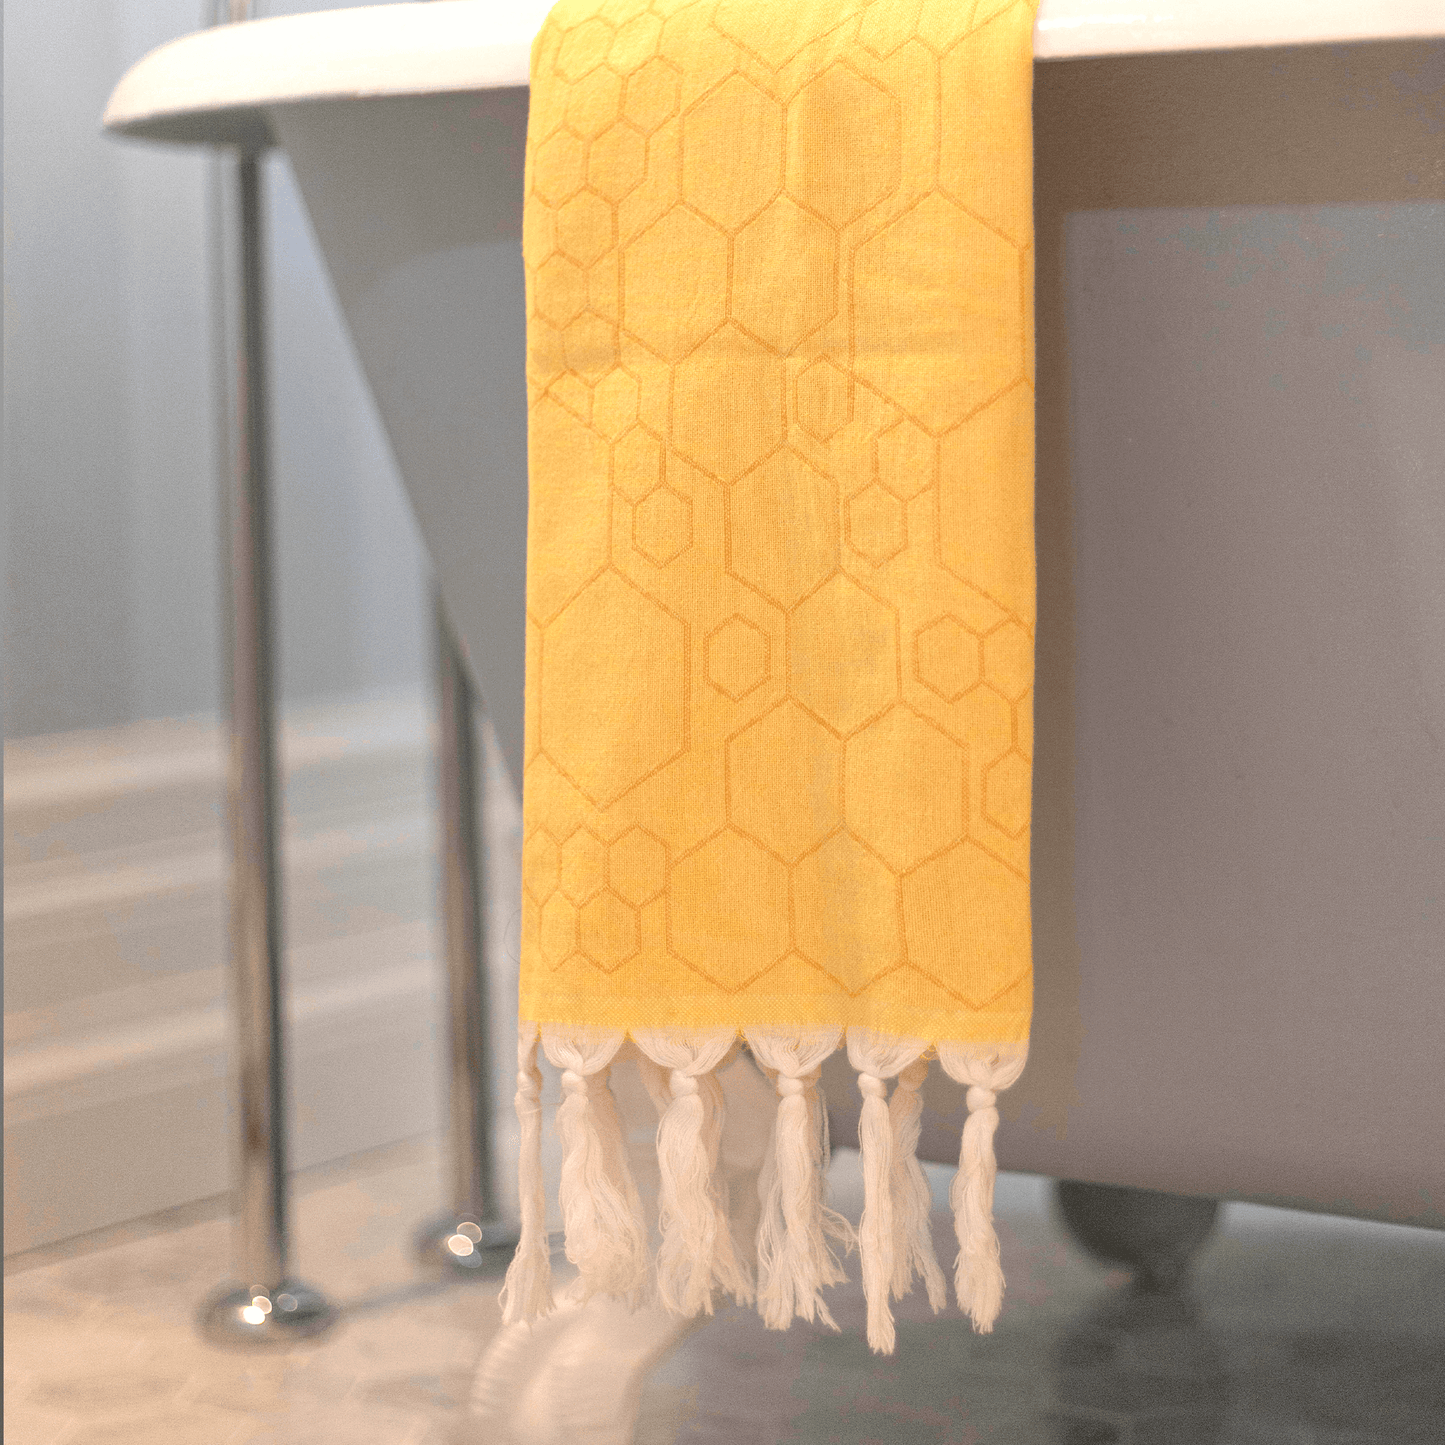  Yellow Turkish hand towel hanging in the bath